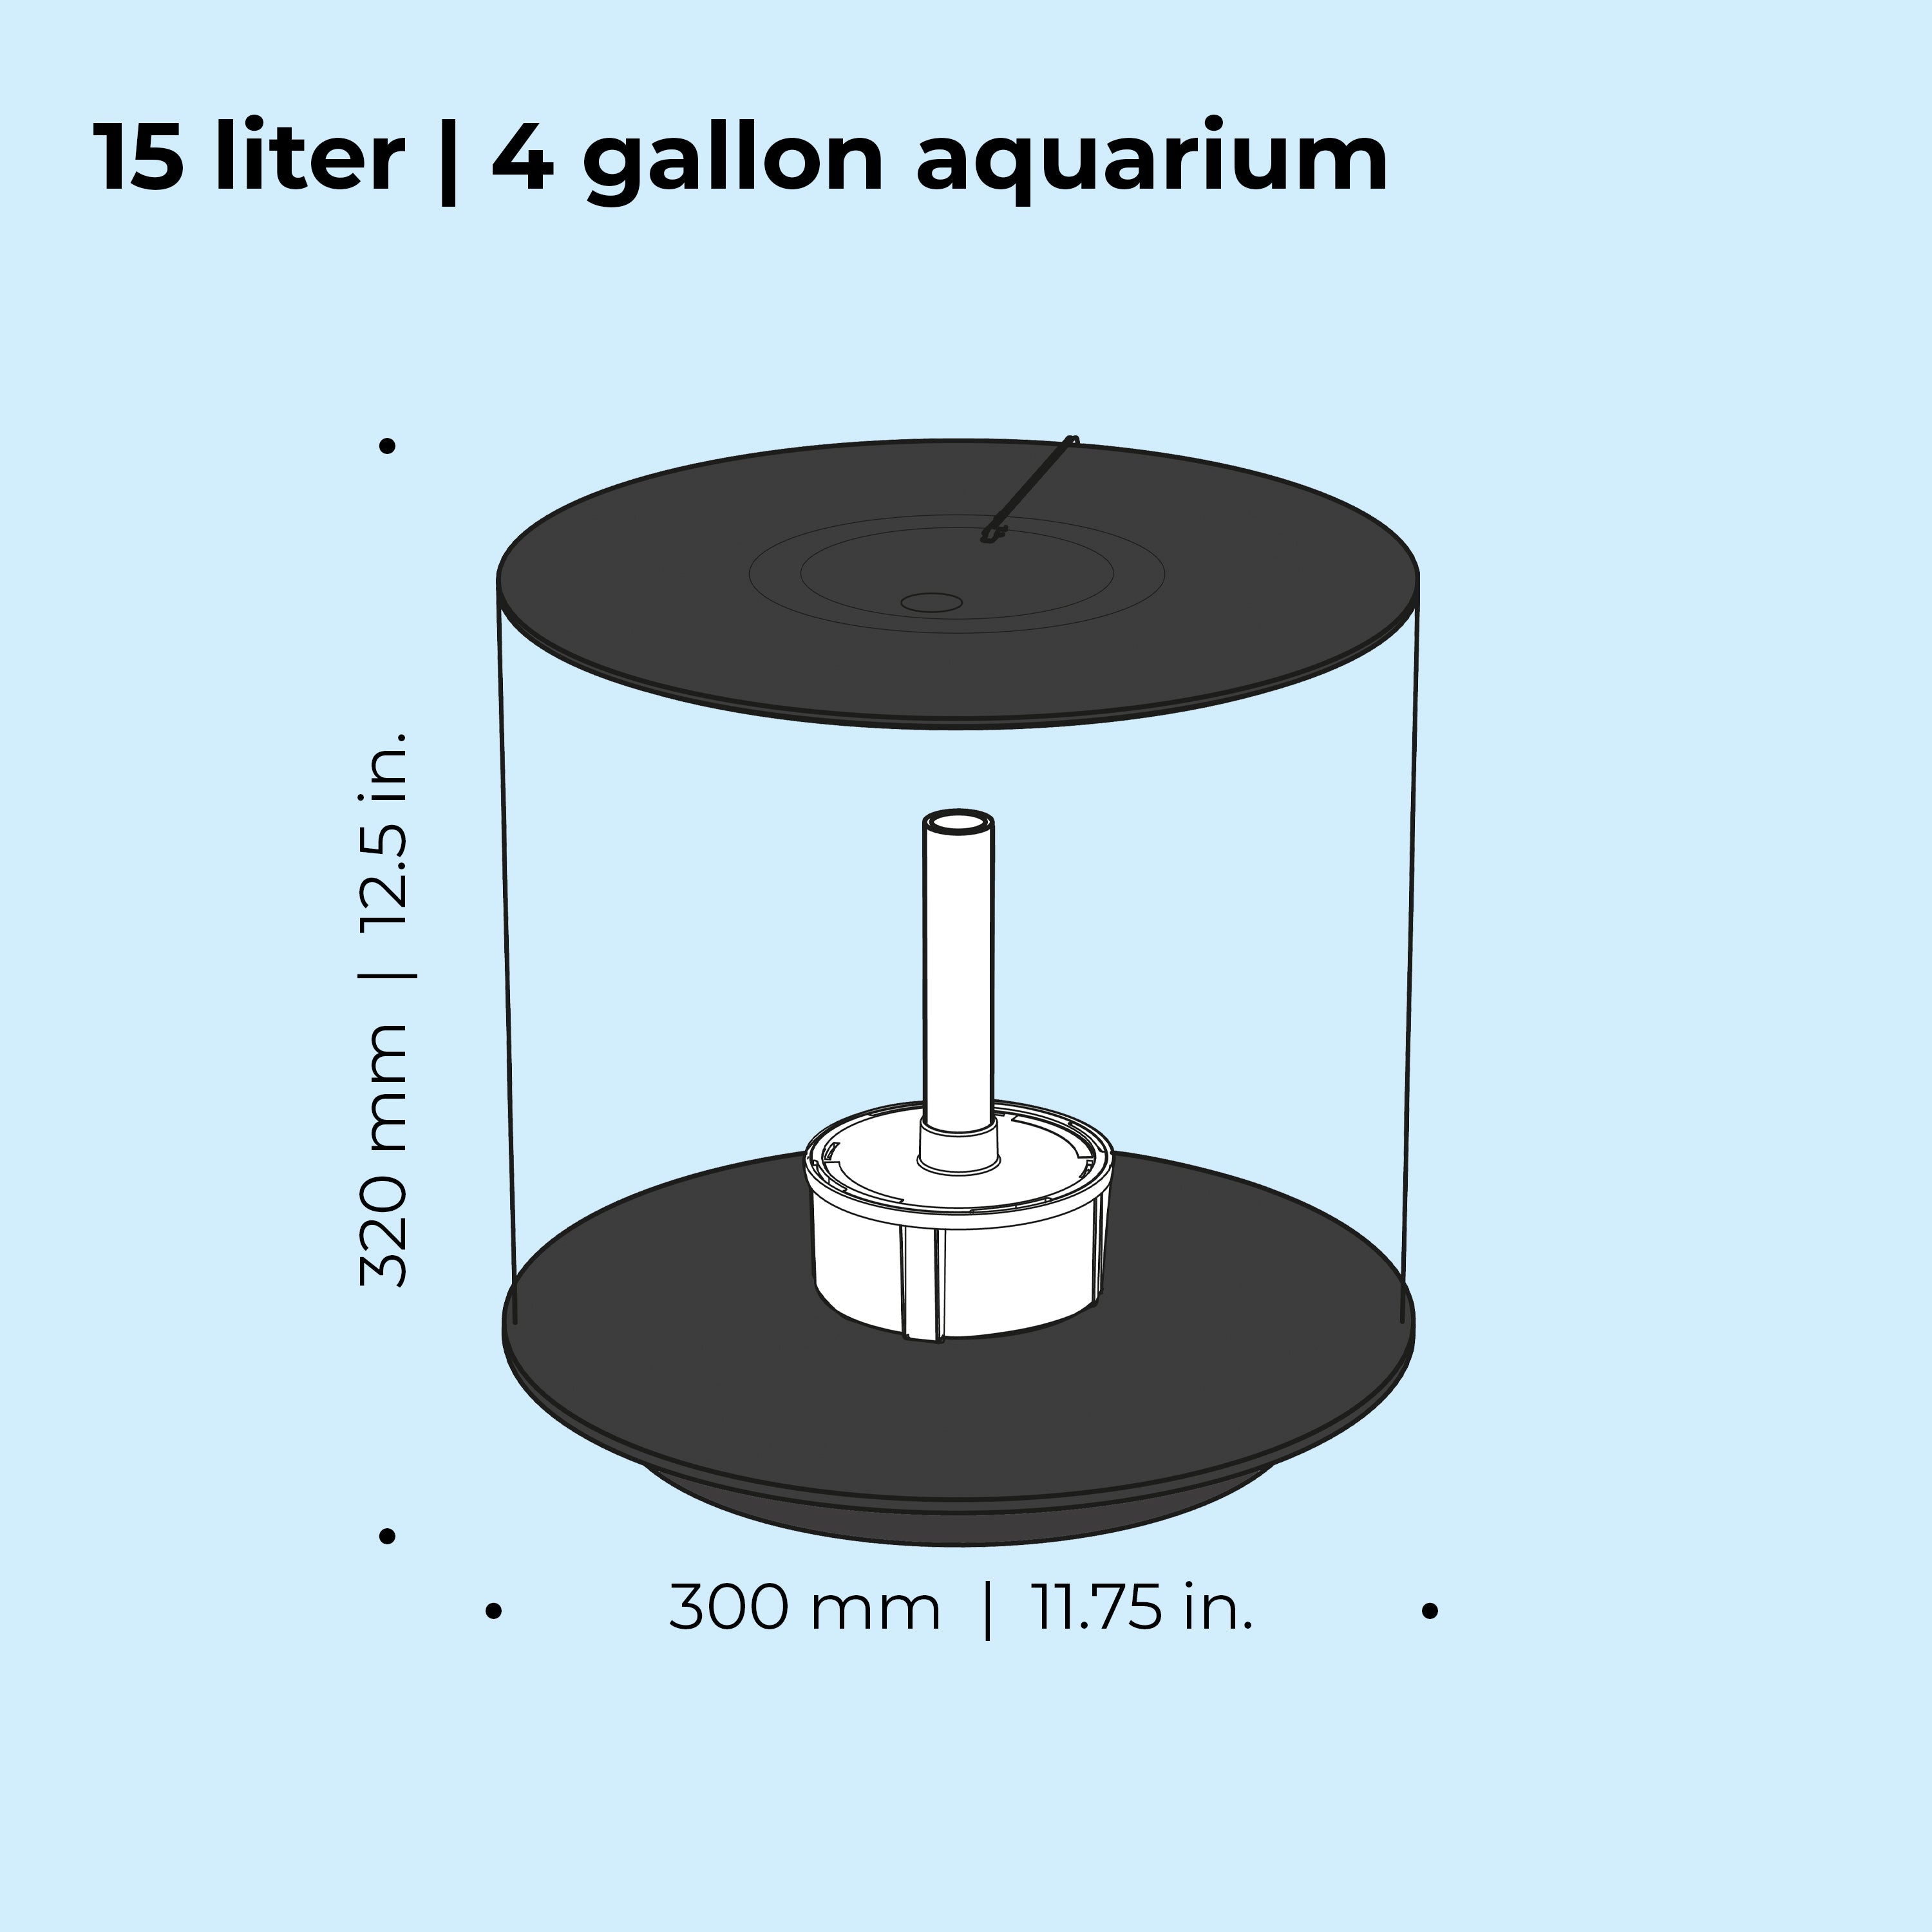 TUBE 15 Aquarium with MCR Light - 4 gallon, 15 liter dimension chart